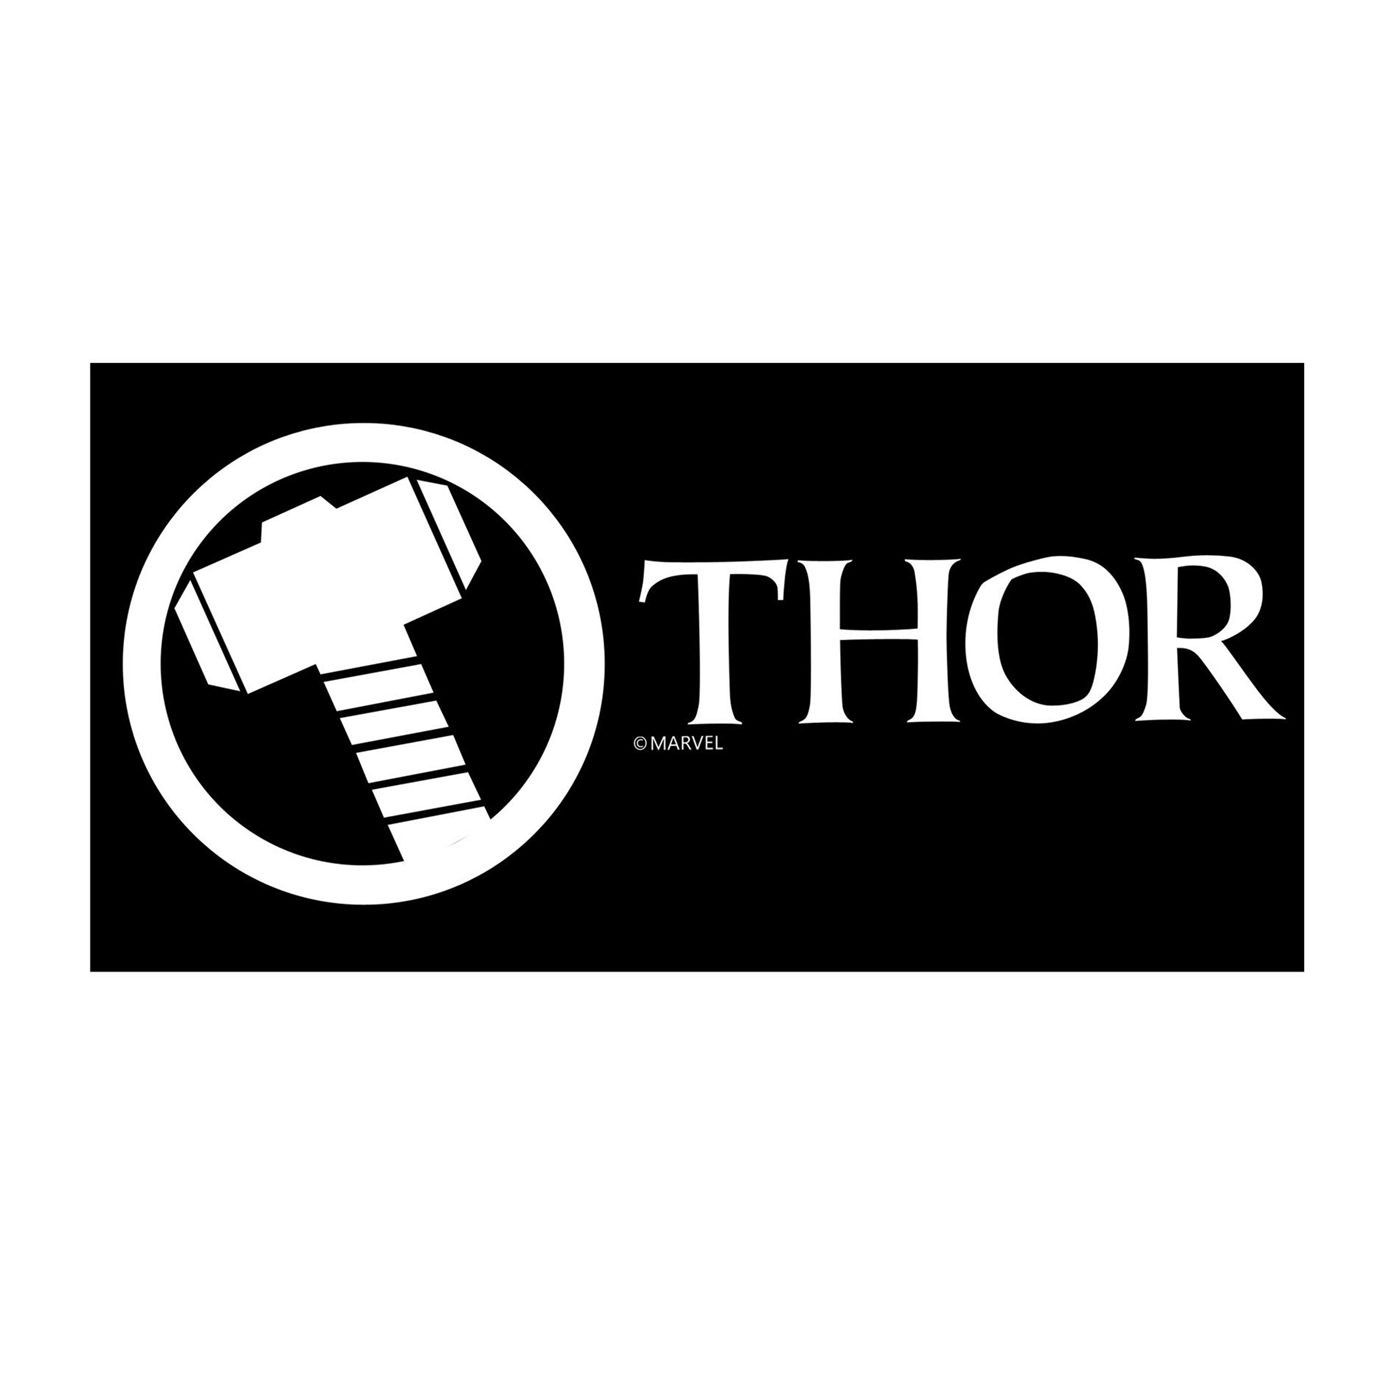 Thor Text & Symbol White Decal